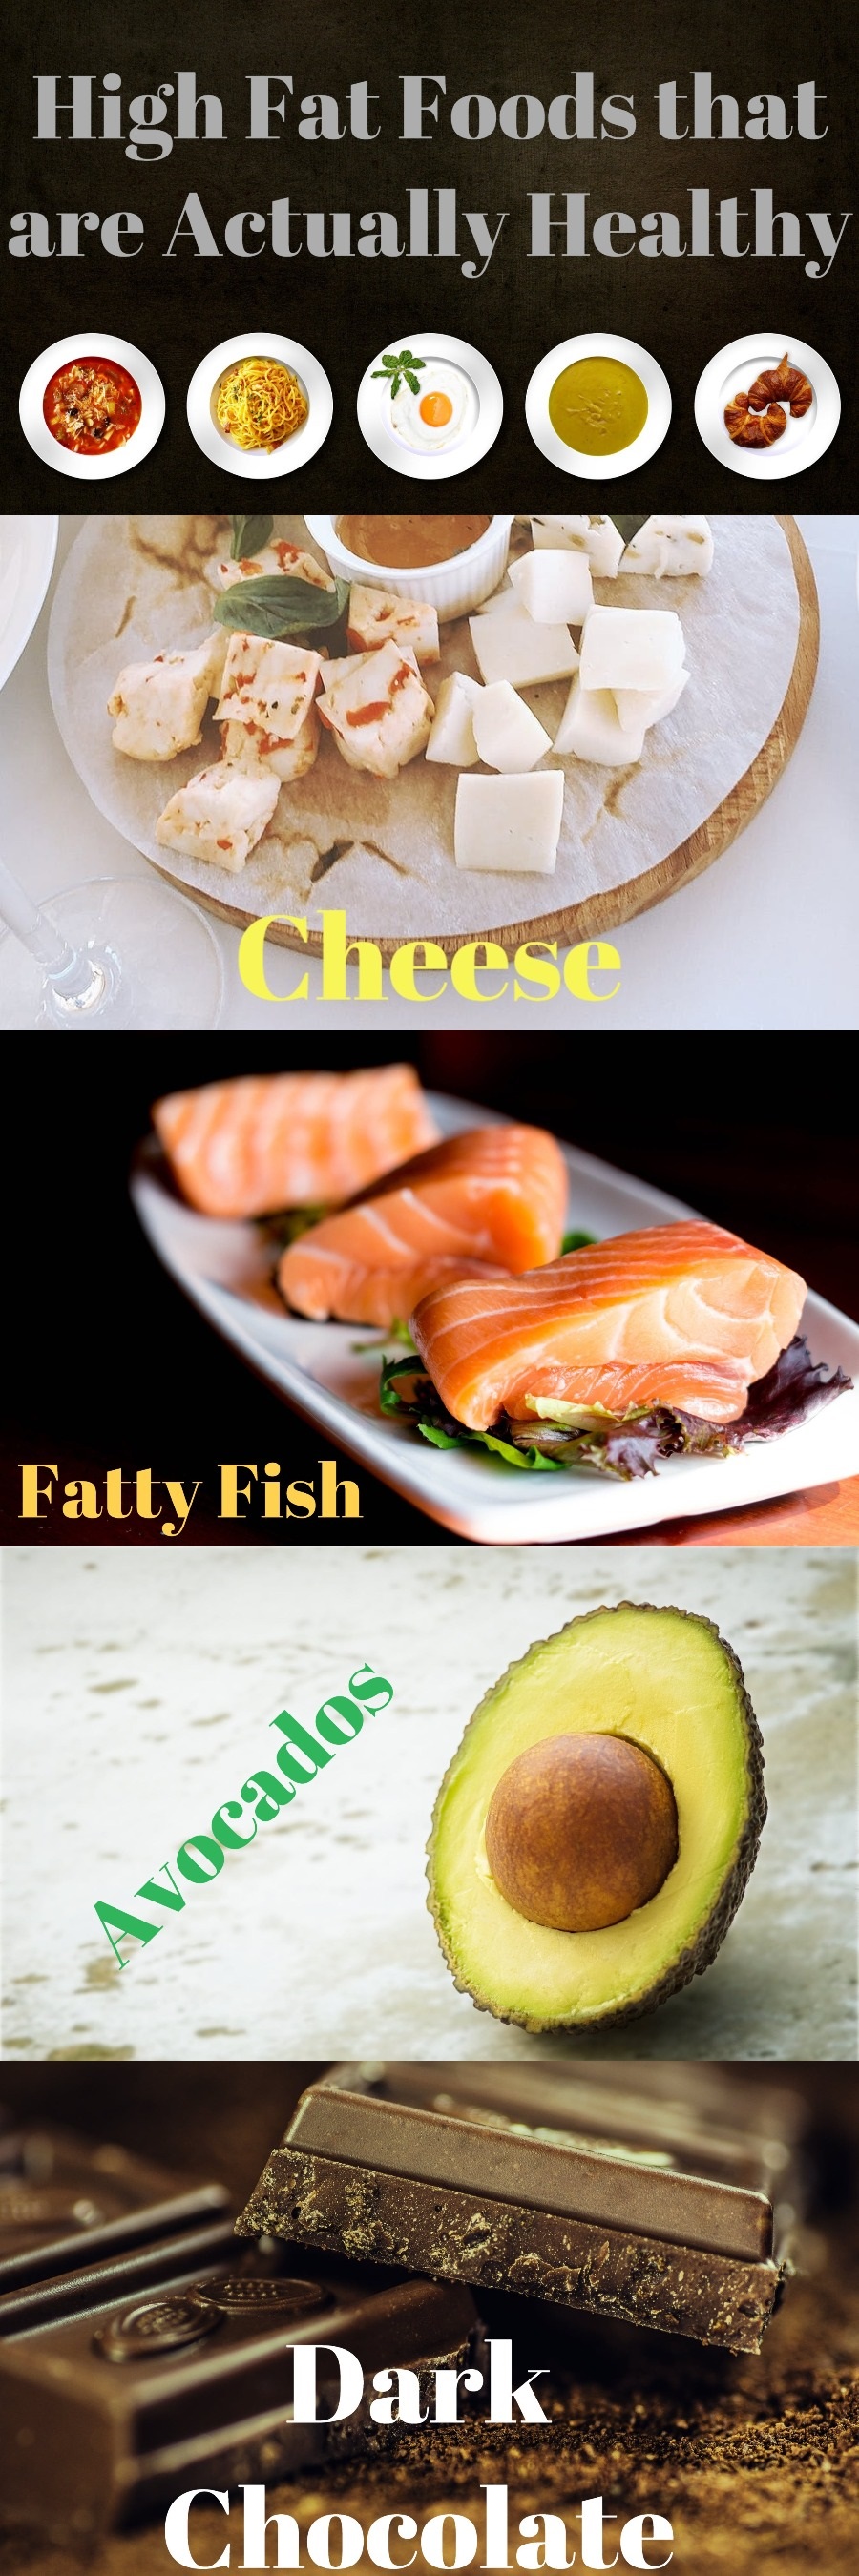 High Fat Foods